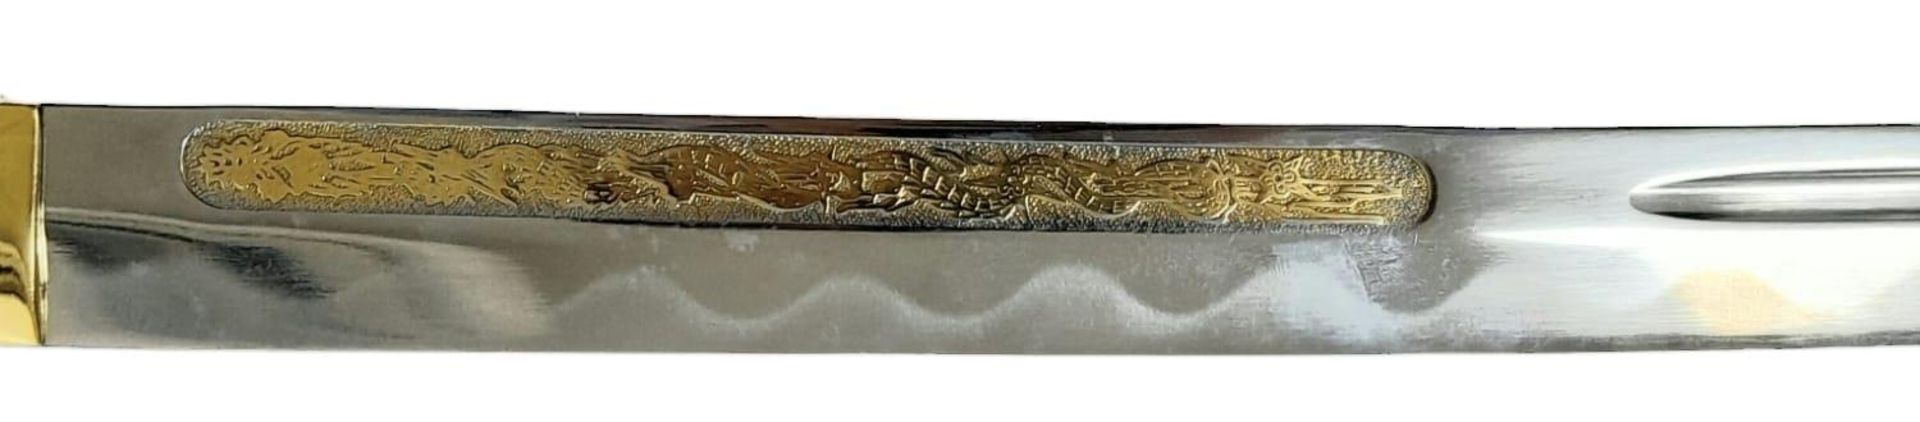 An Excellent Condition, Highly Decorative, Dragon Detail, Modern Display Katana Sword. 105cn Length. - Bild 8 aus 9